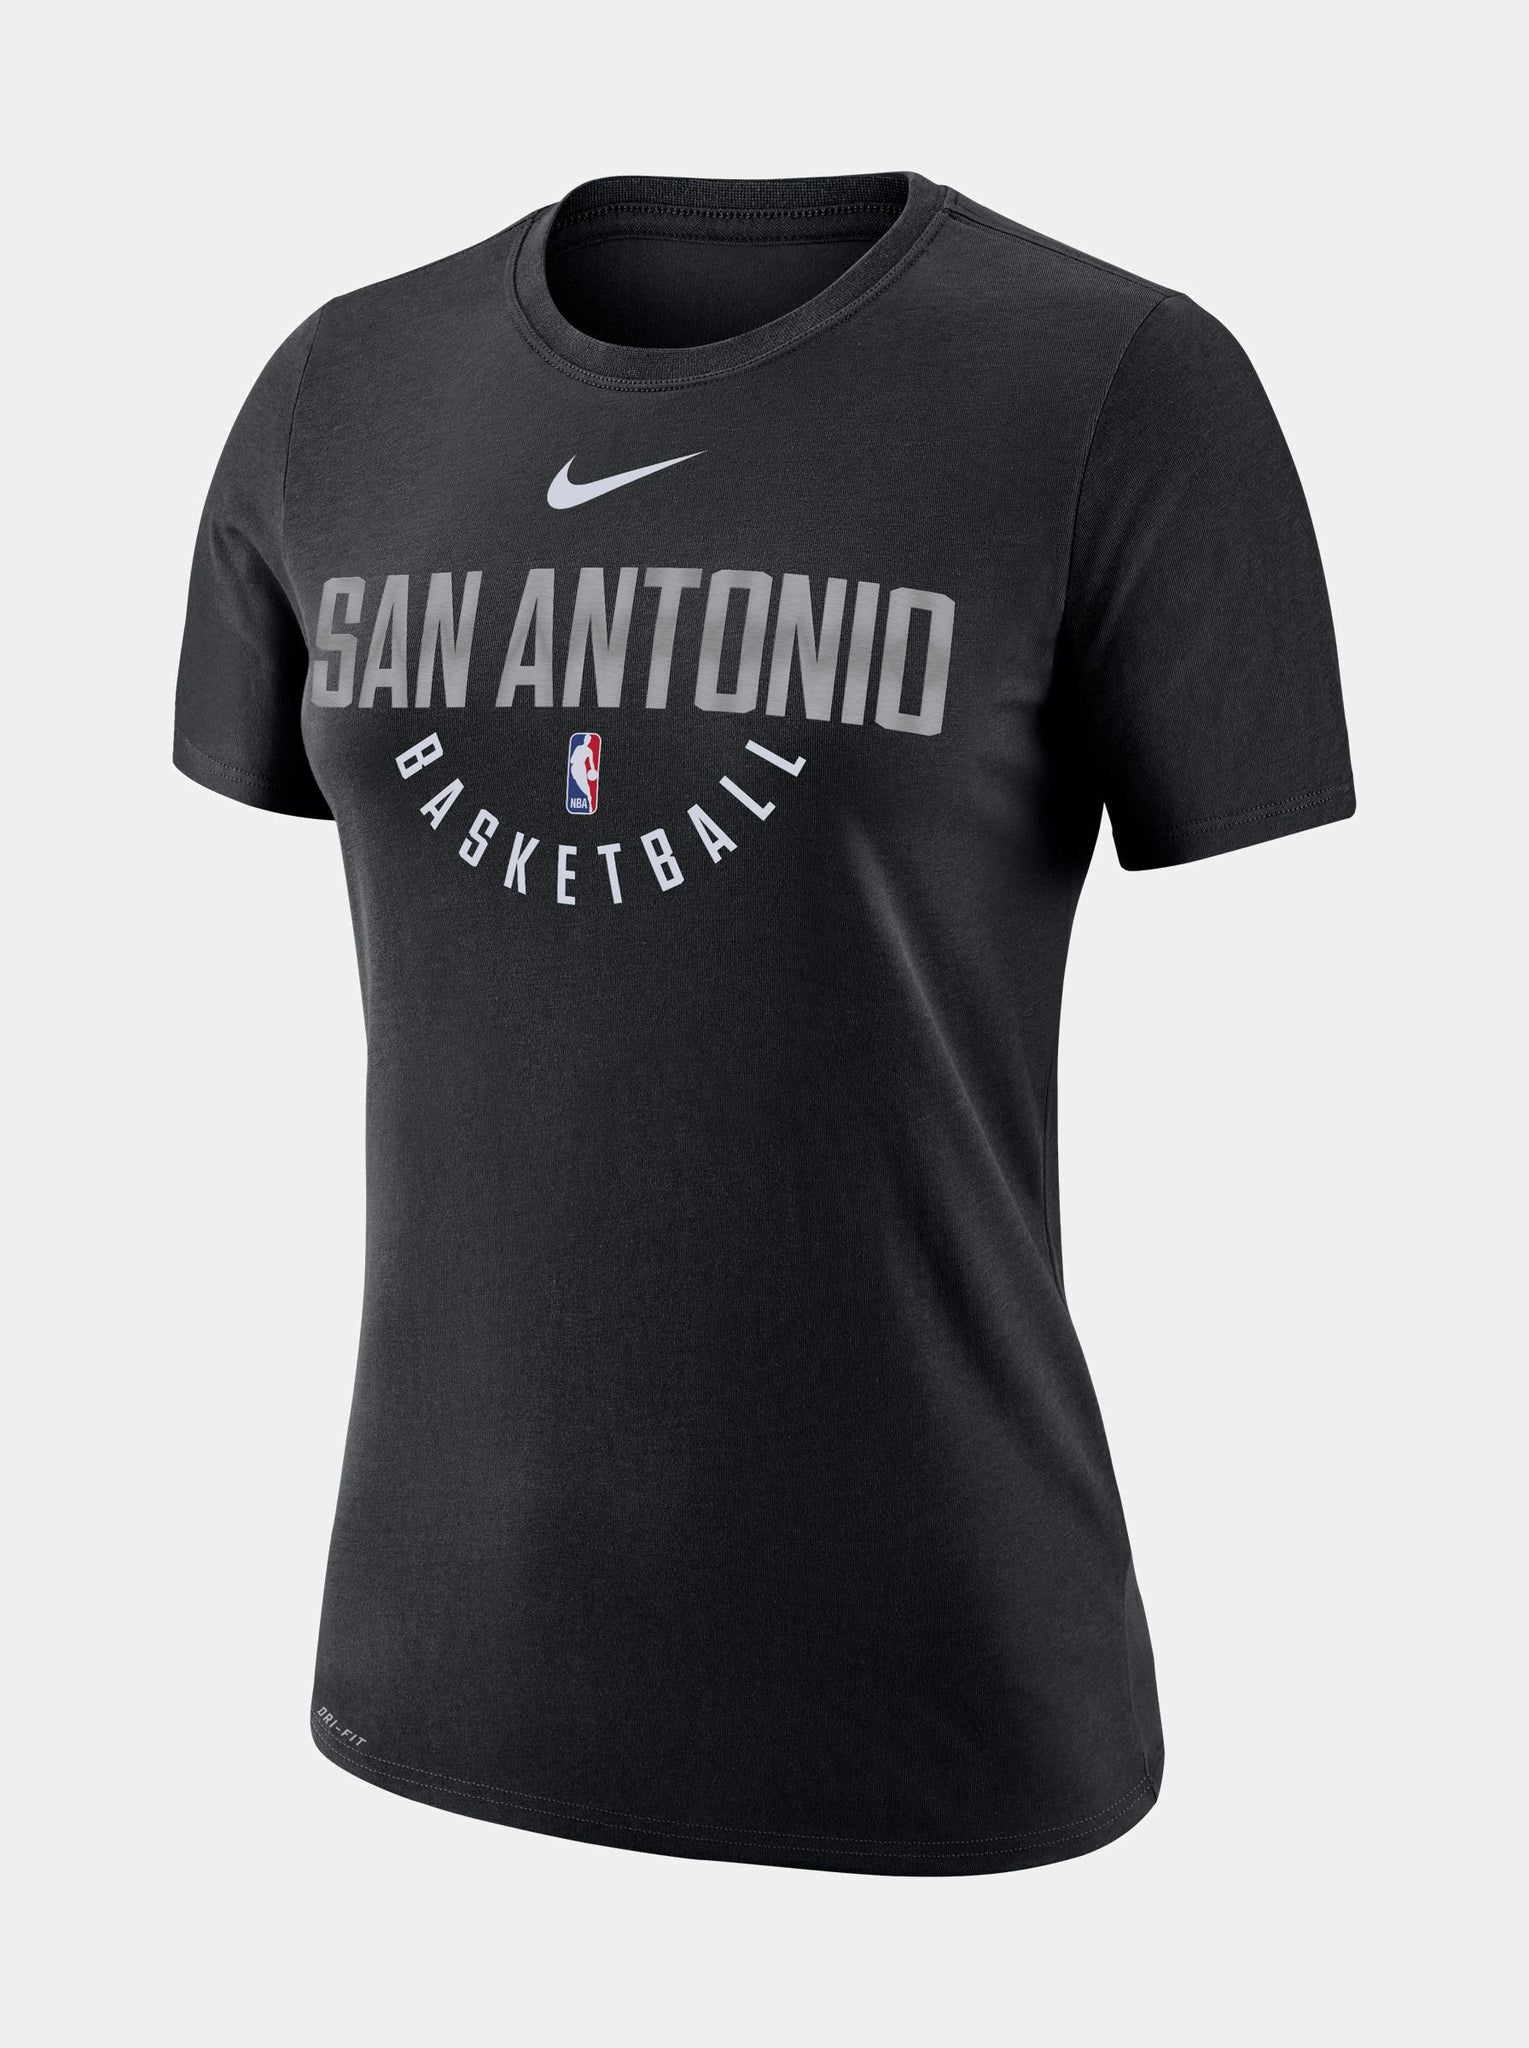 San Antonio Spurs Nike Women's Practice Performance T-Shirt - Black, Size: Medium